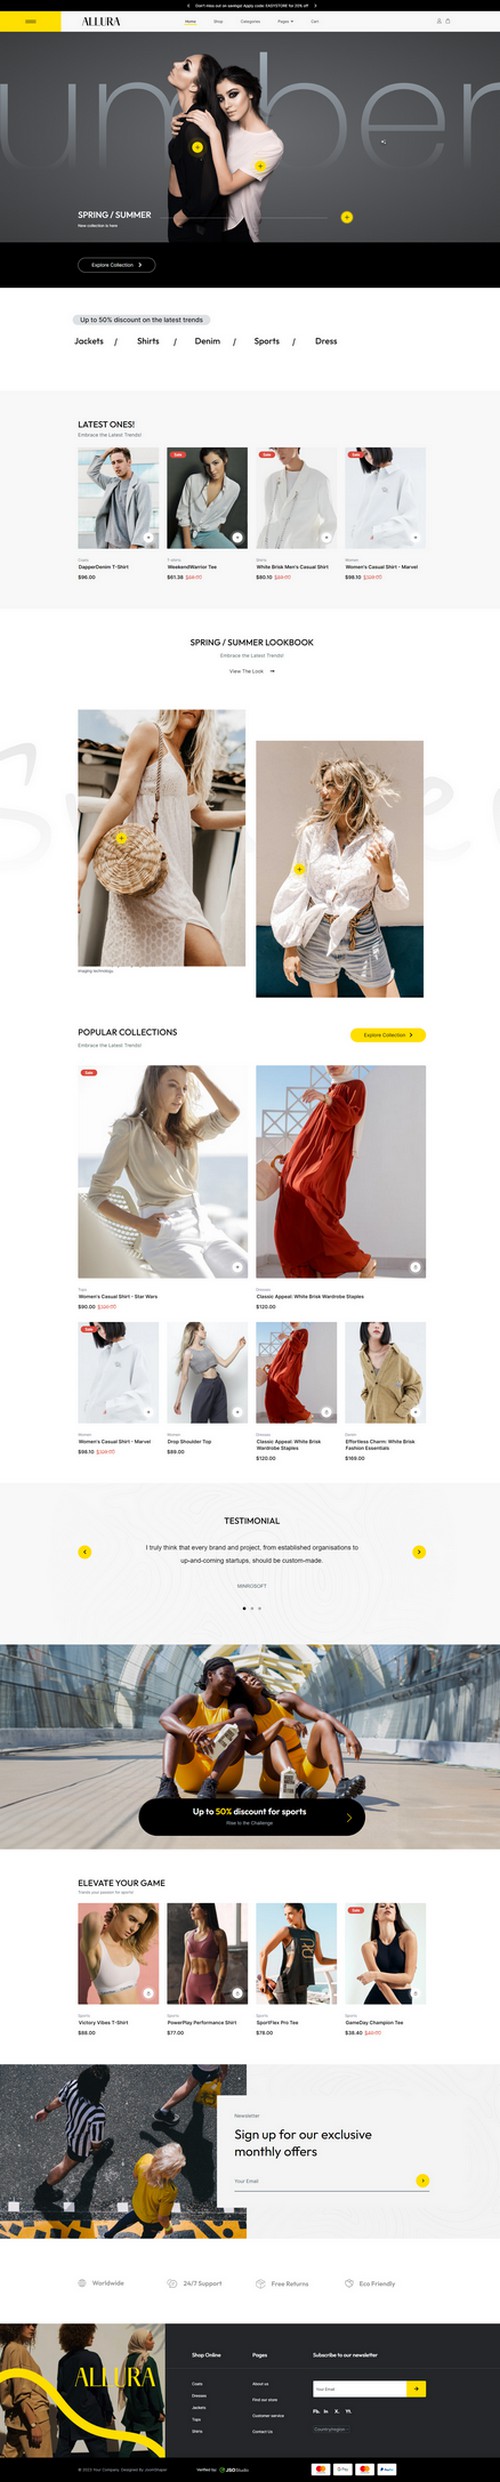 Allura - Joomla eCommerce Template for Online Fashion Stores